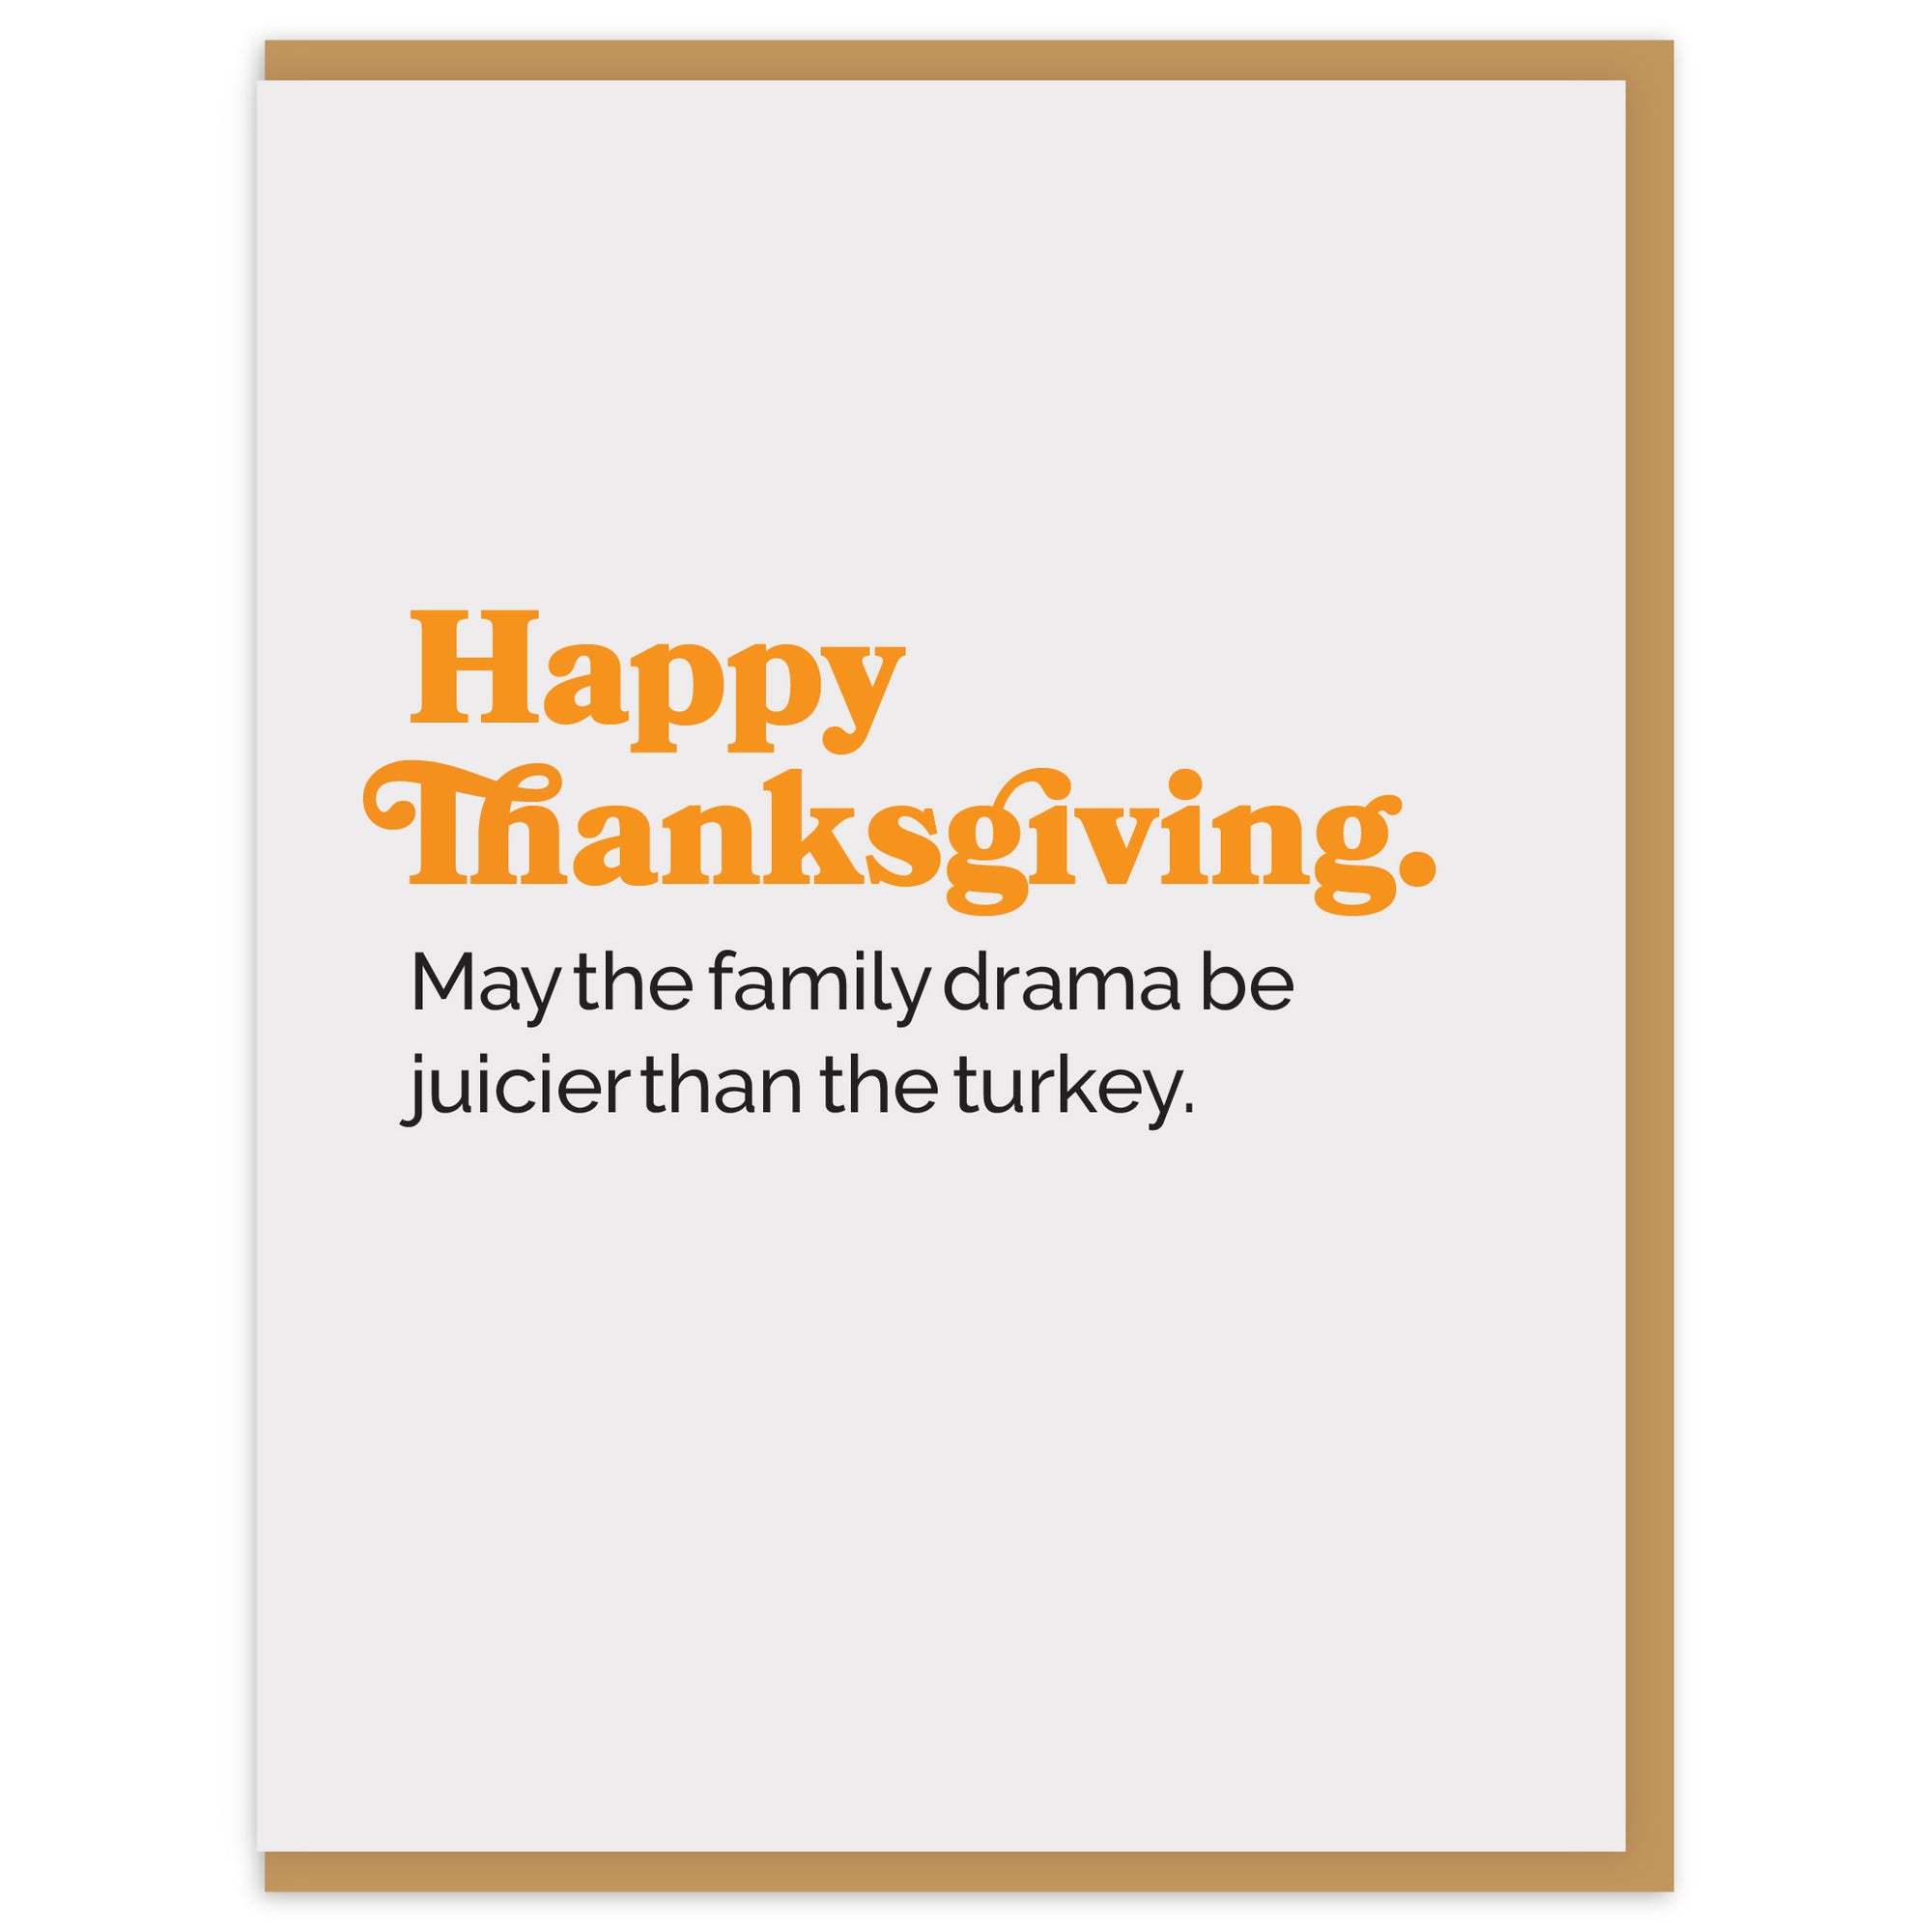 Happy Thanksgiving. May the family drama be juicier than the turkey.